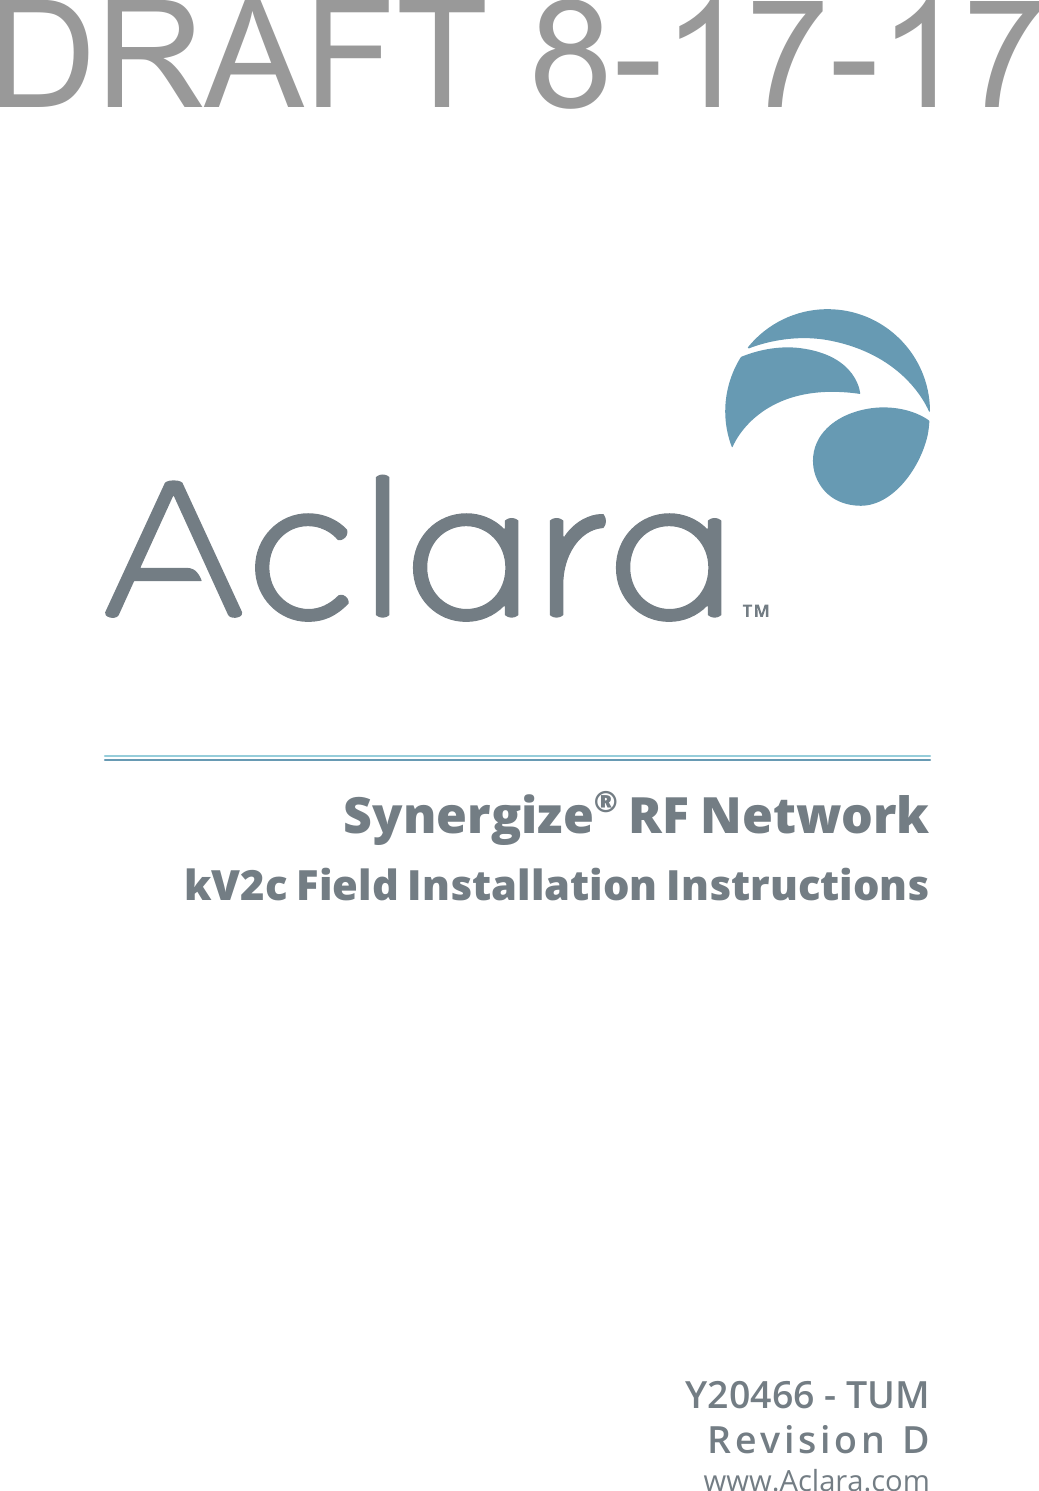 Synergize® RF Network kV2c Field Installation InstructionsY20466 - TUMRevision Dwww.Aclara.comDRAFT 8-17-17